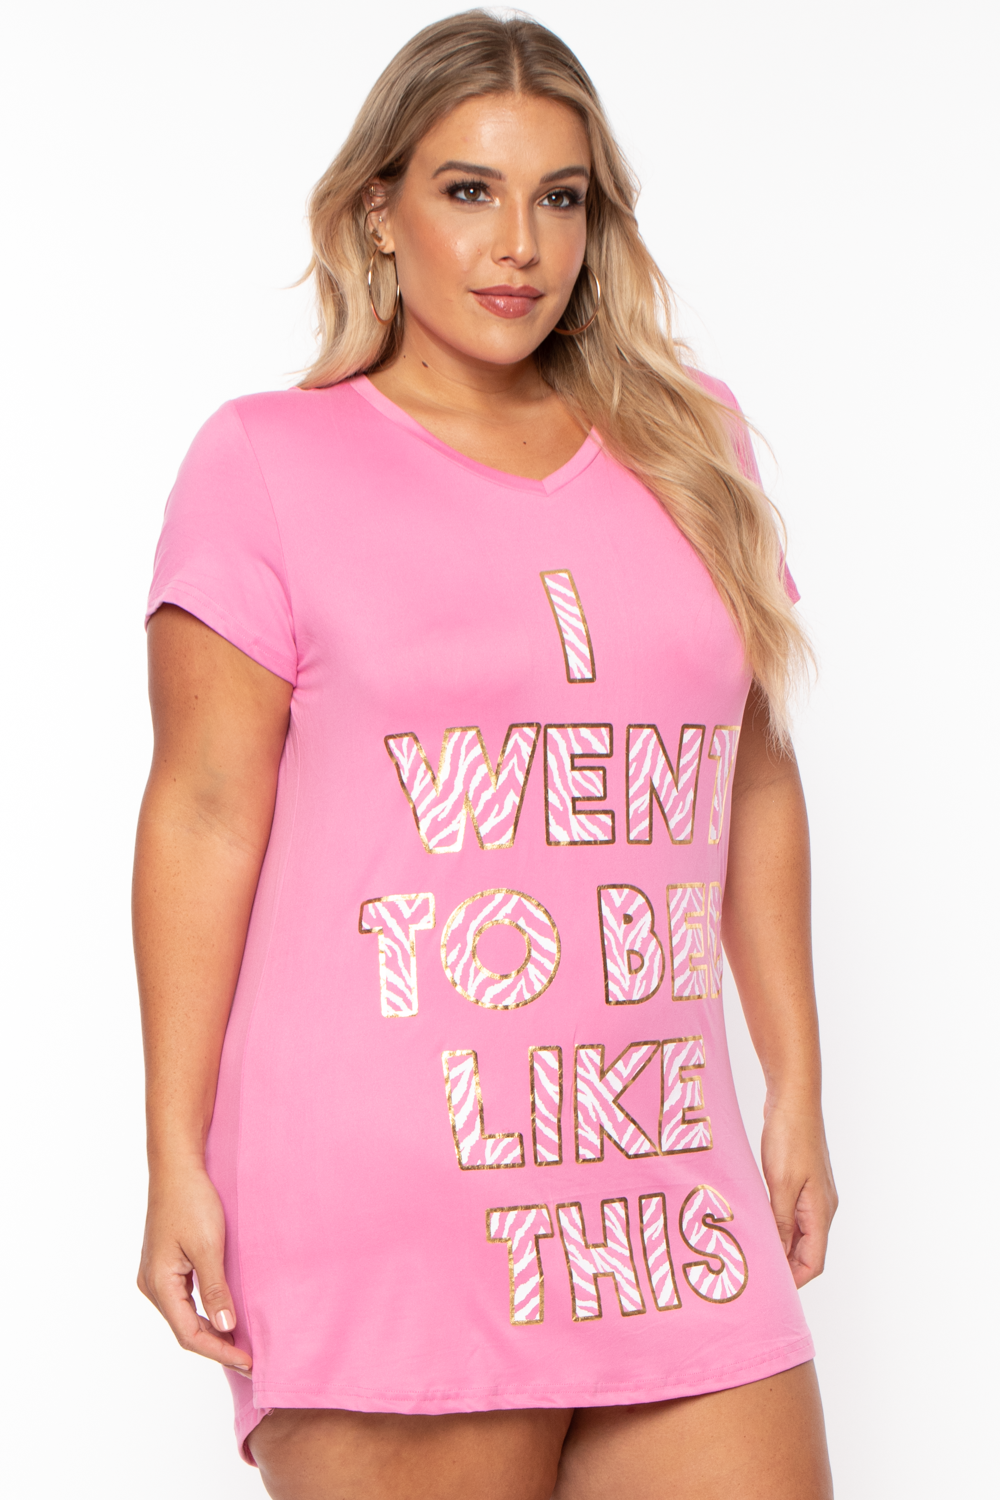 Plus Size "Went To Bed" Comfy Sleep Shirt  - Pink - Curvy Sense